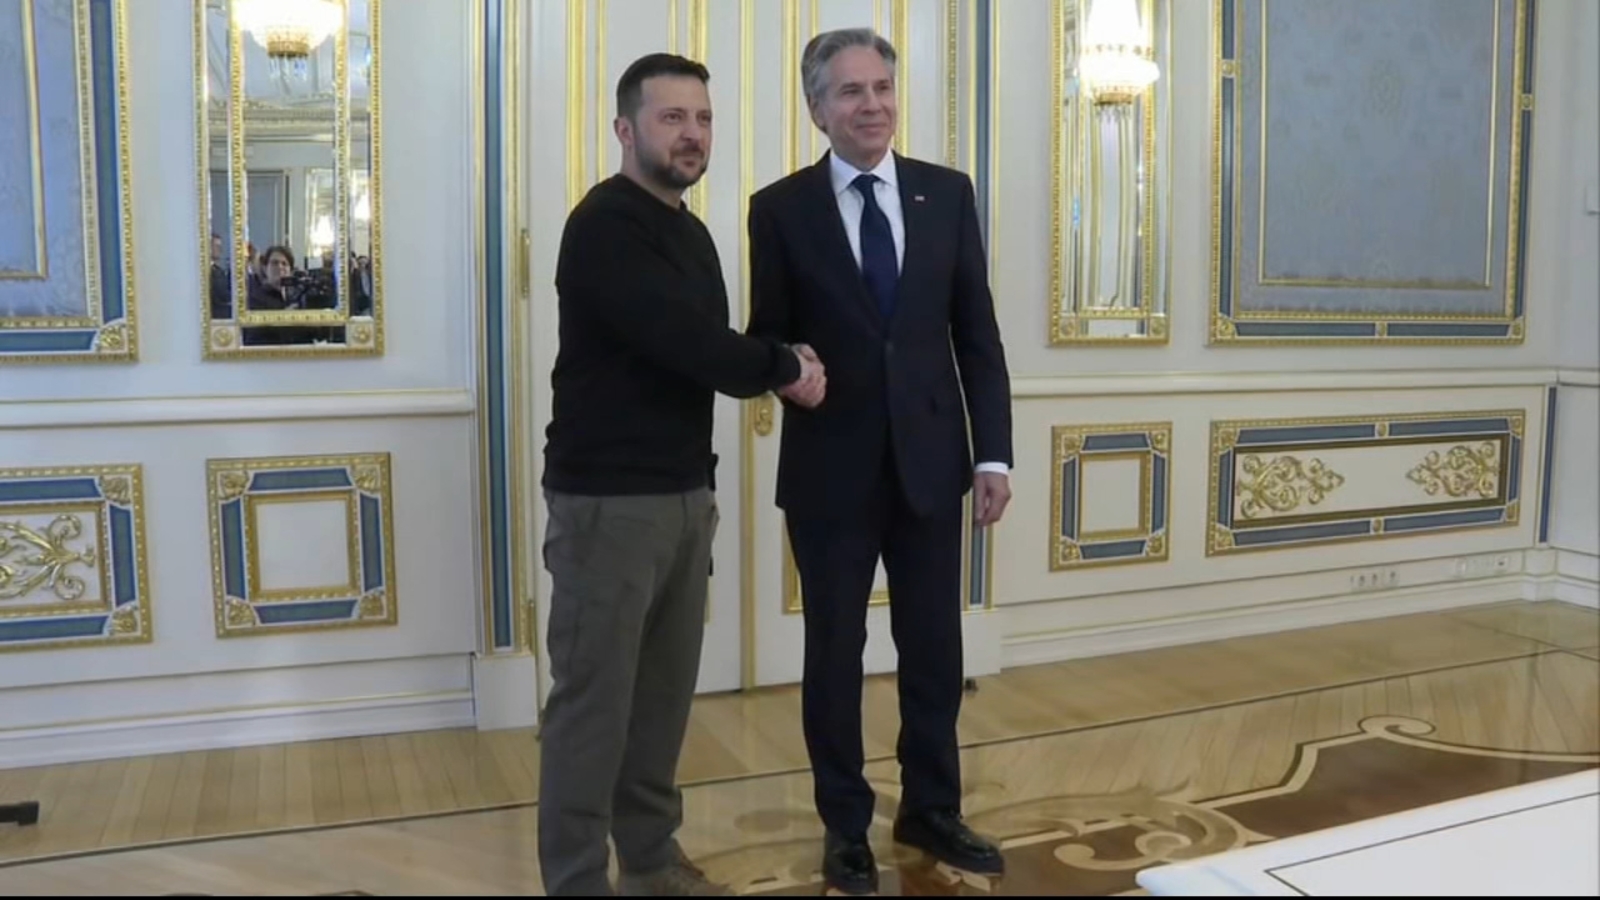 US Secretary of State Antony Blinken arrives in Kyiv to reassure Ukraine of US support, meet with President Volodymyr Zelensky [Video]